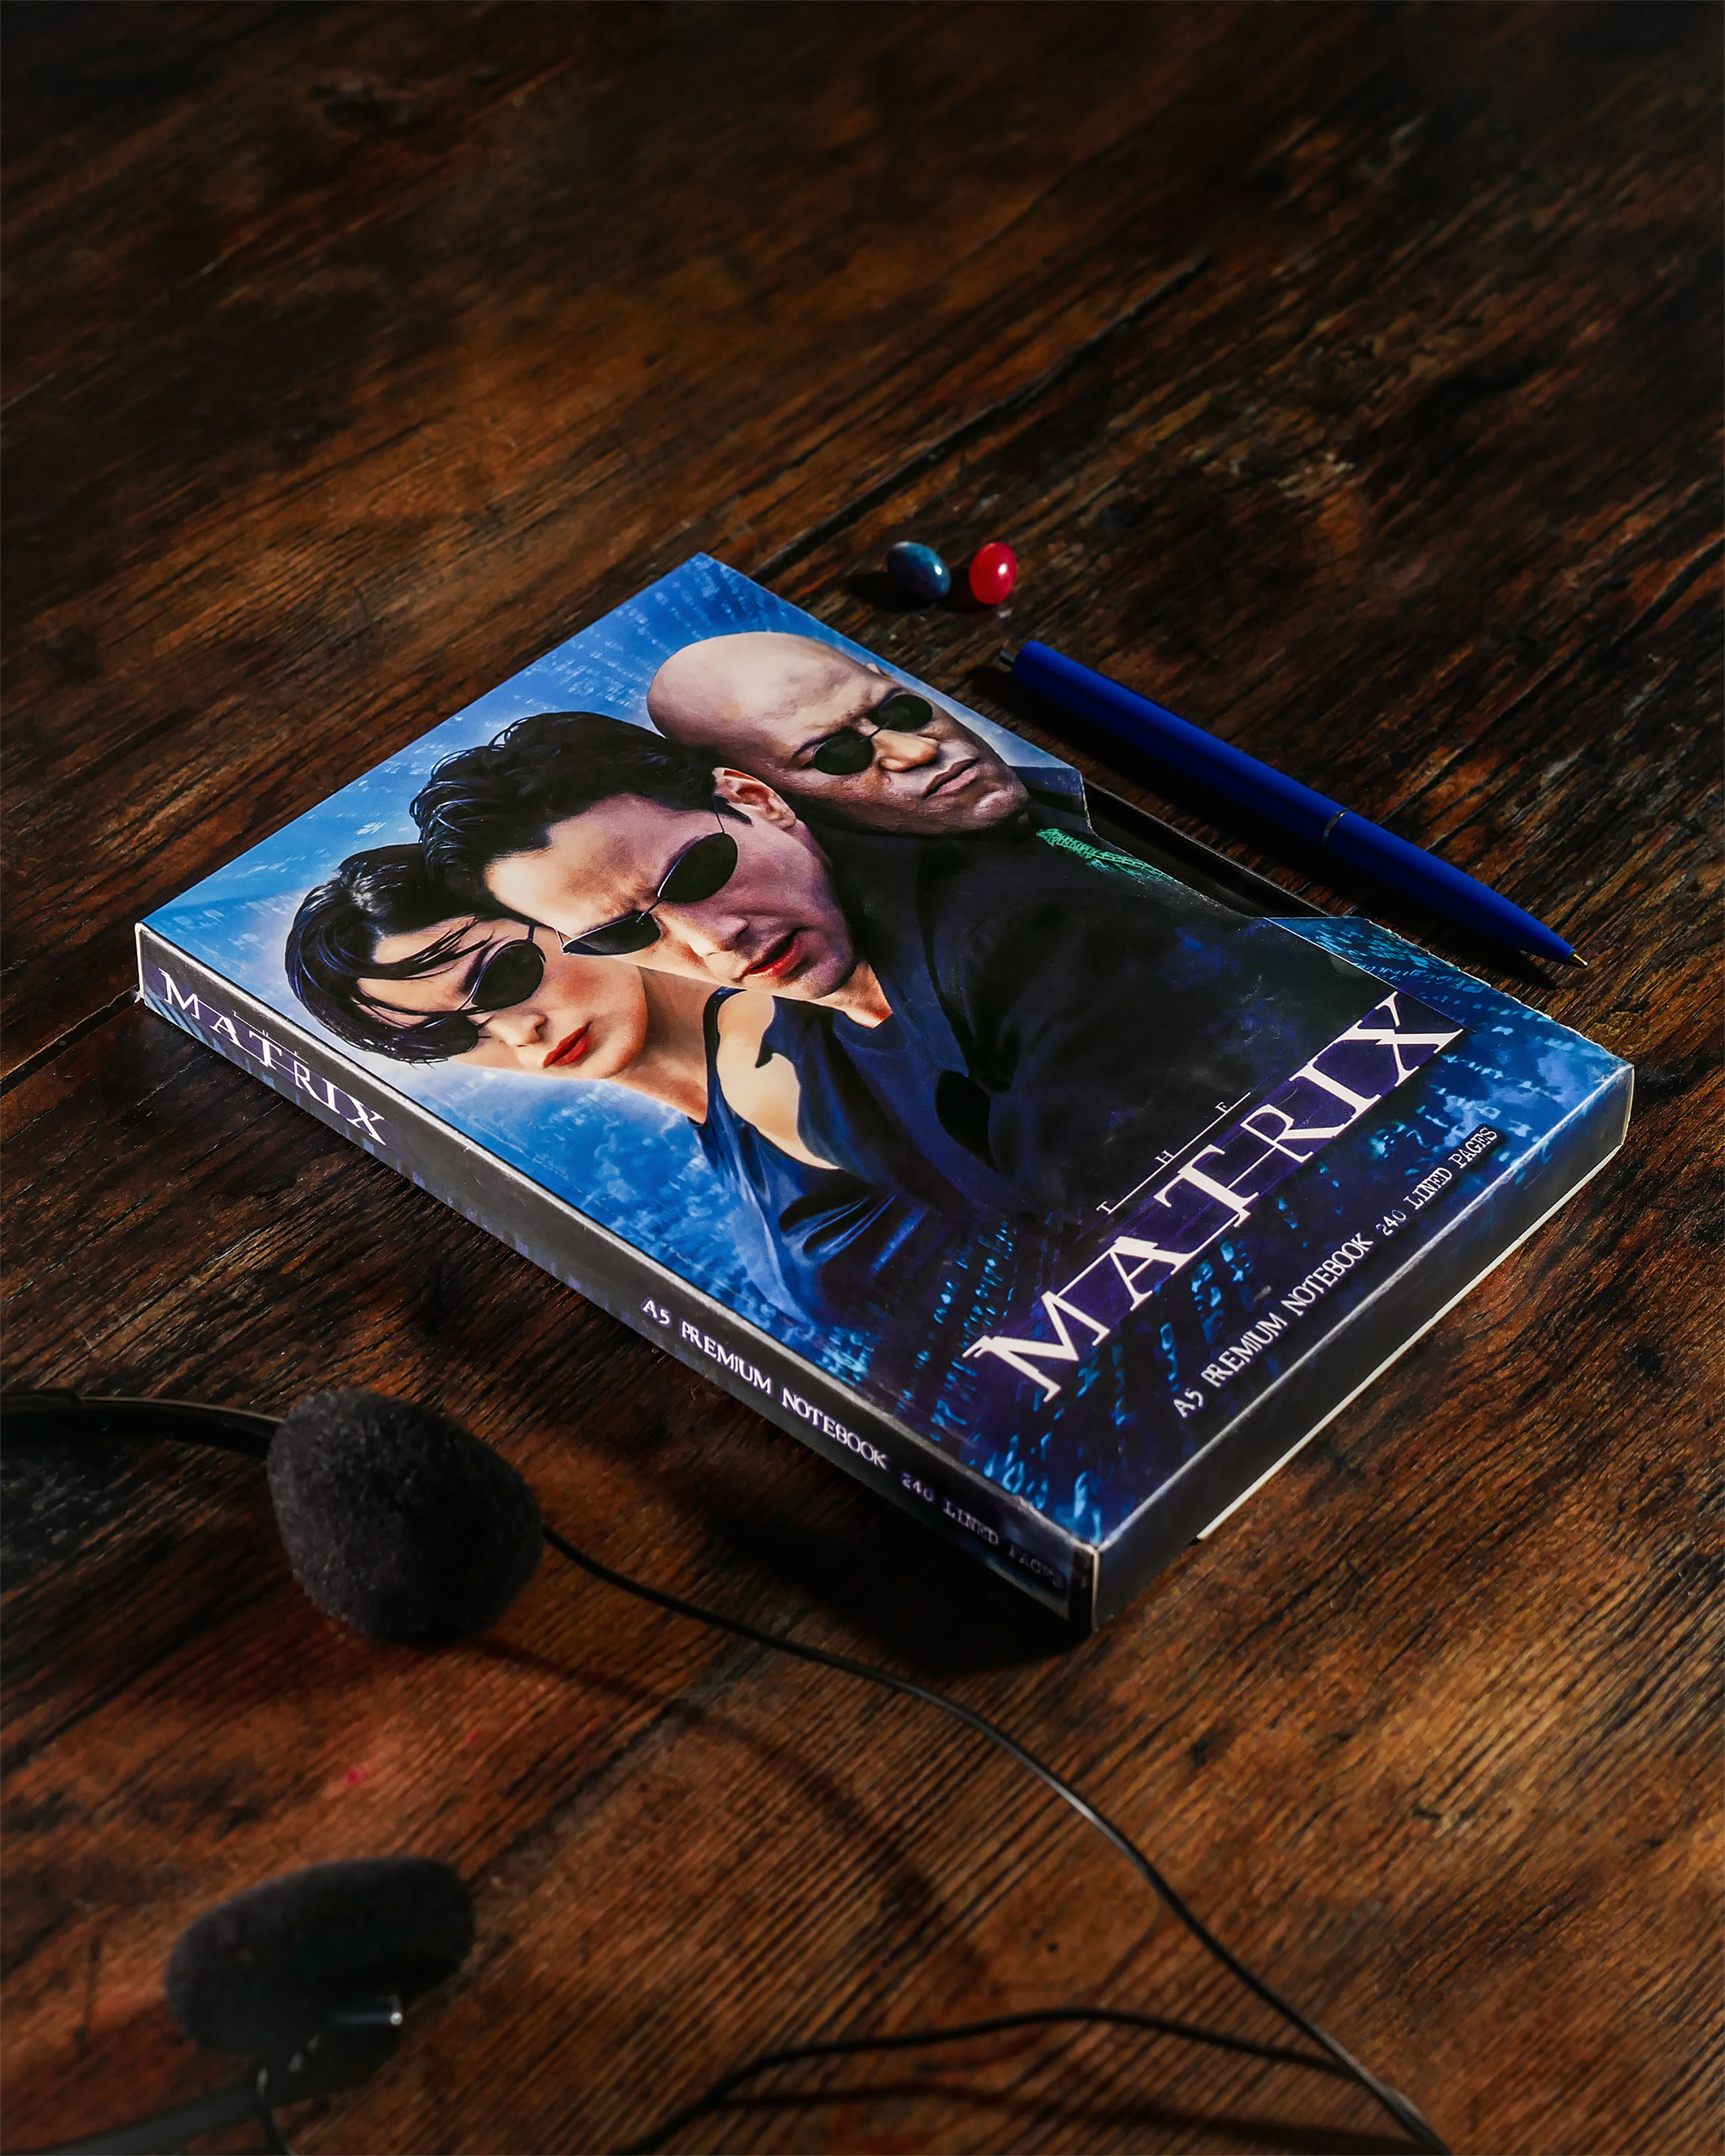 Matrix VHS Premium Notitieboek A5